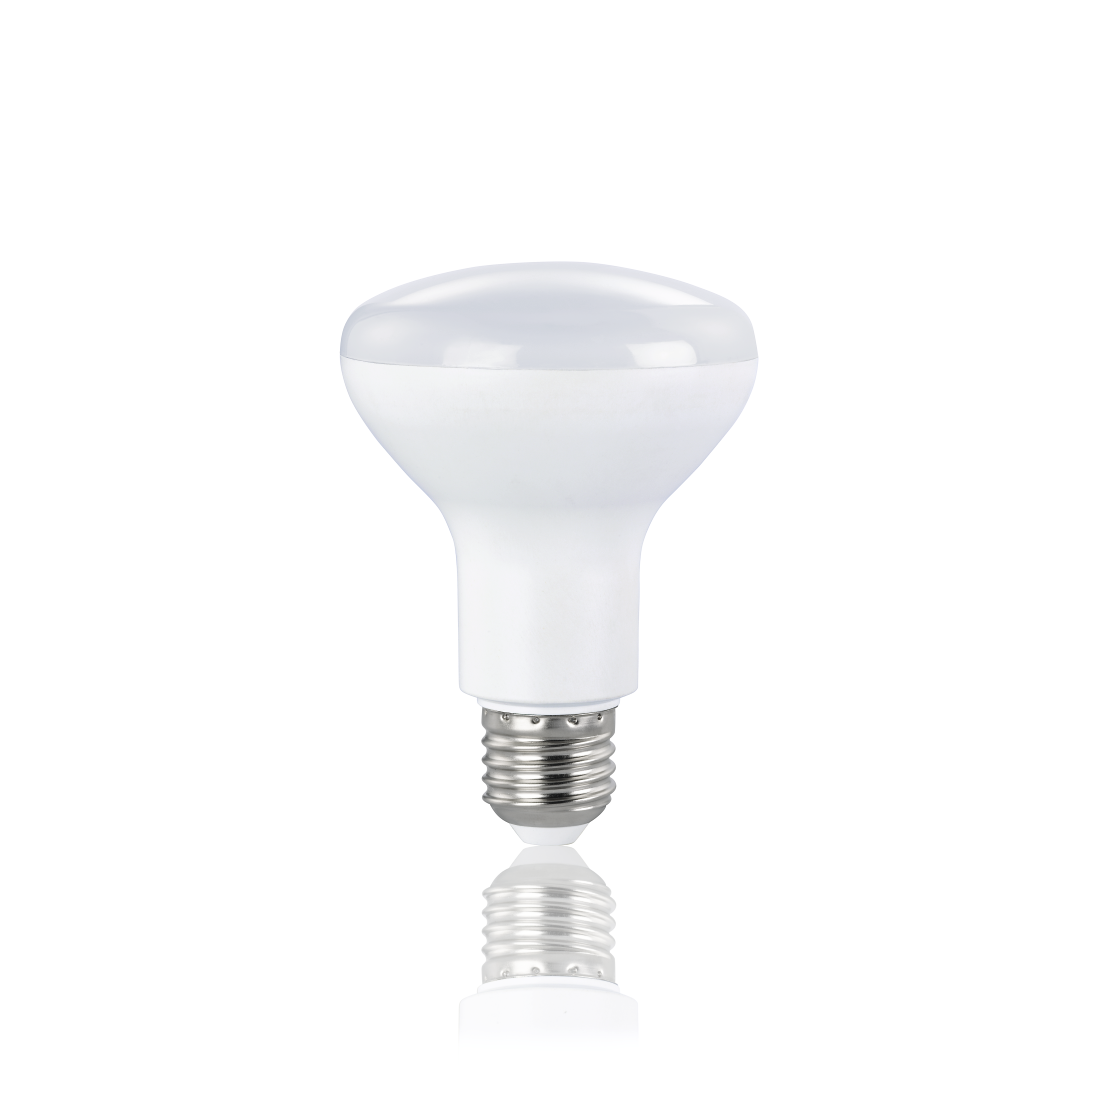 abx2 Druckfähige Abbildung 2 - Xavax, LED-Lampe, E27, 1050lm ersetzt 75W, Reflektorlampe R80, Warmweiß